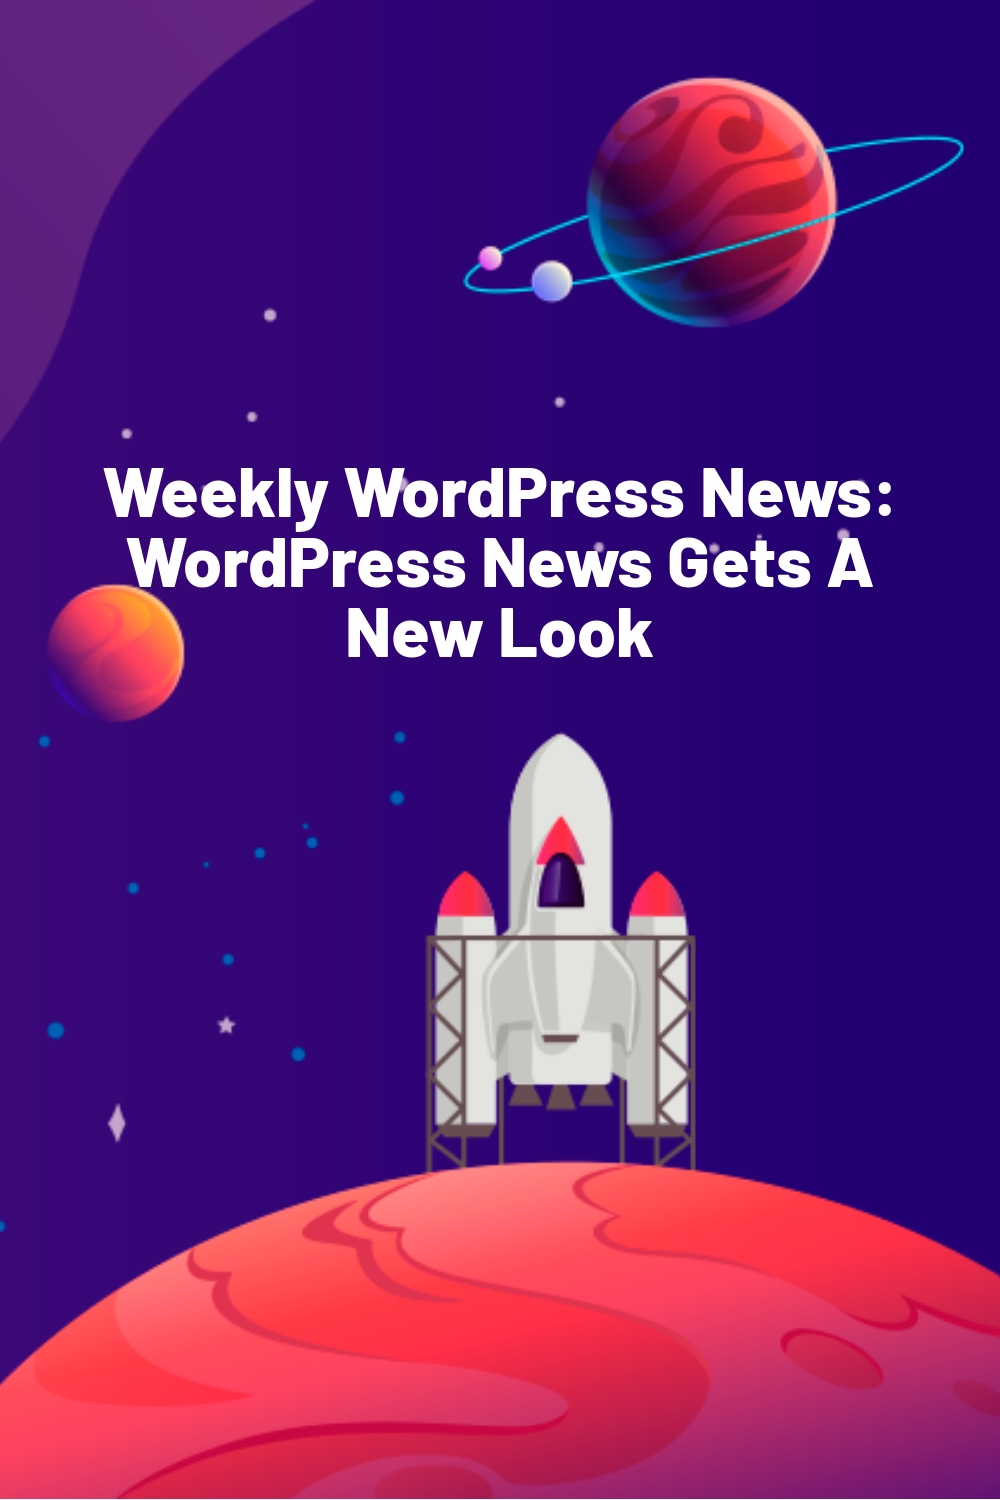 Weekly WordPress News: WordPress News Gets A New Look